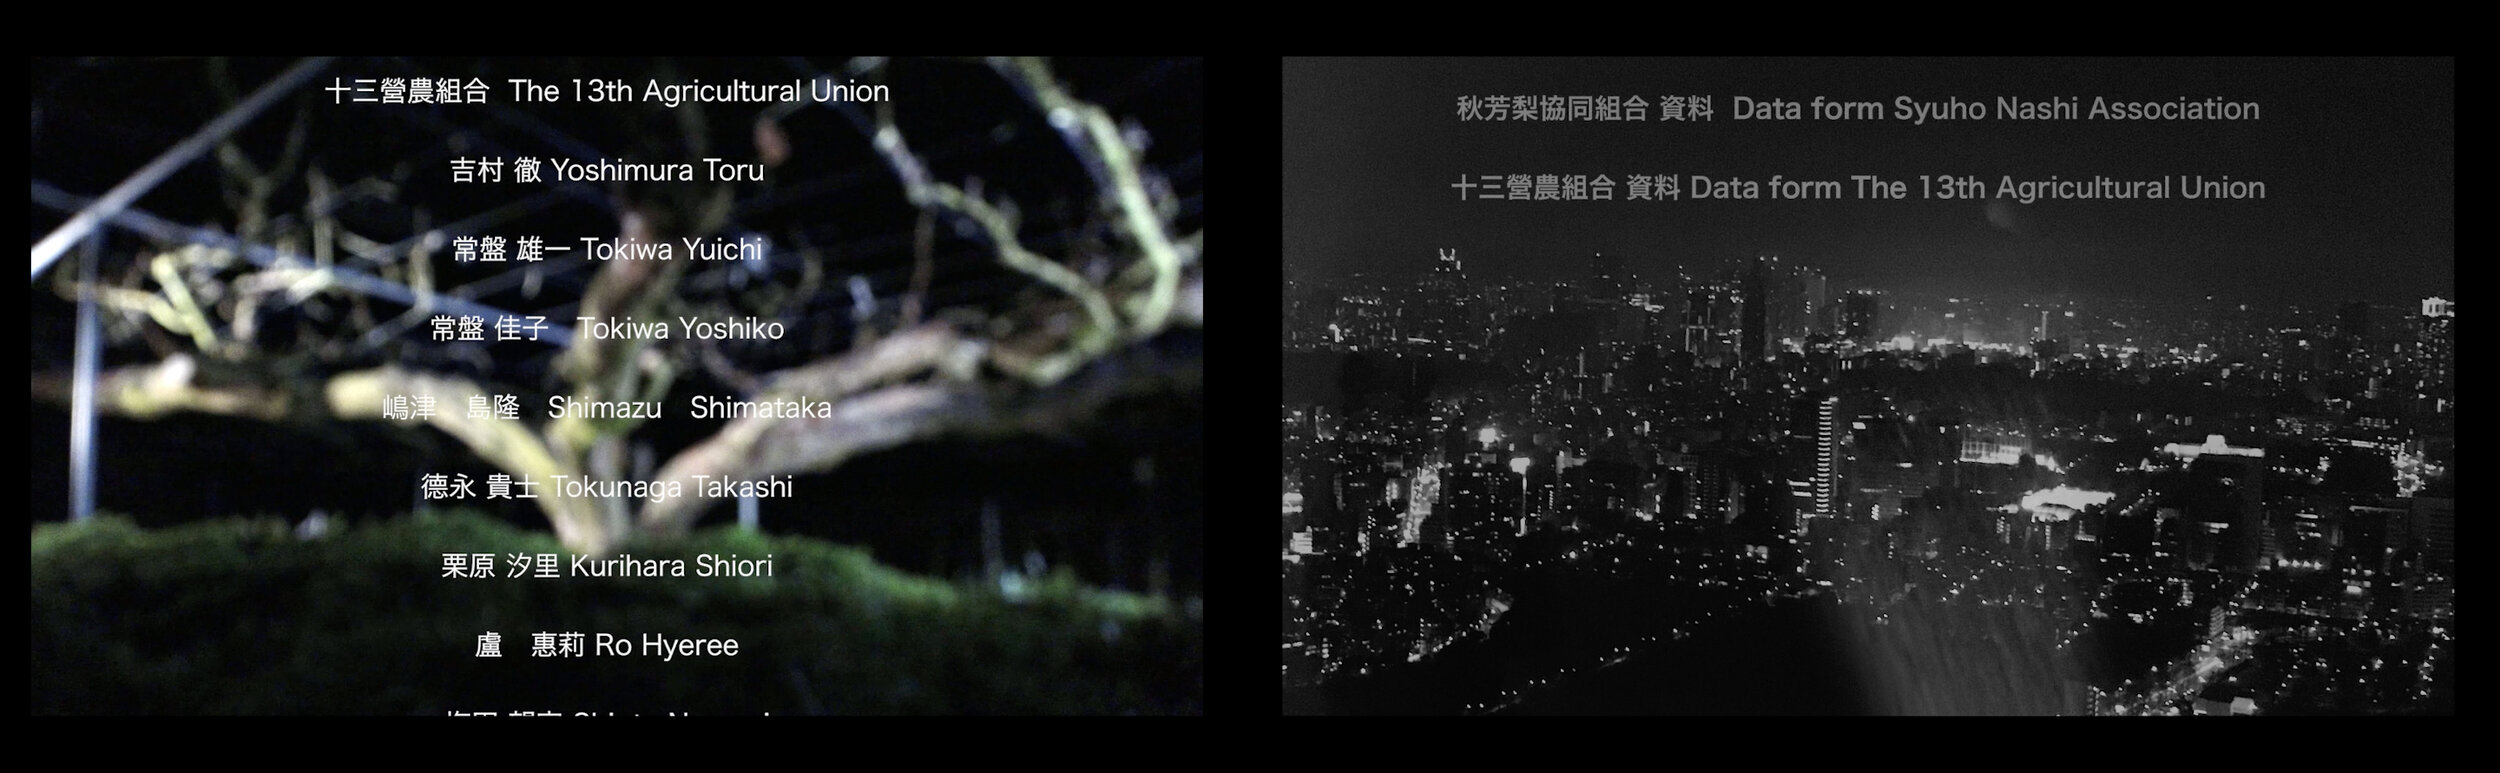  &lt;平成三十一年二月秋芳梨樹&gt; 雙頻道影片  &lt;Syuho Pear Tree in Heisei 31th, February.&gt; 2-Channel Videos. 